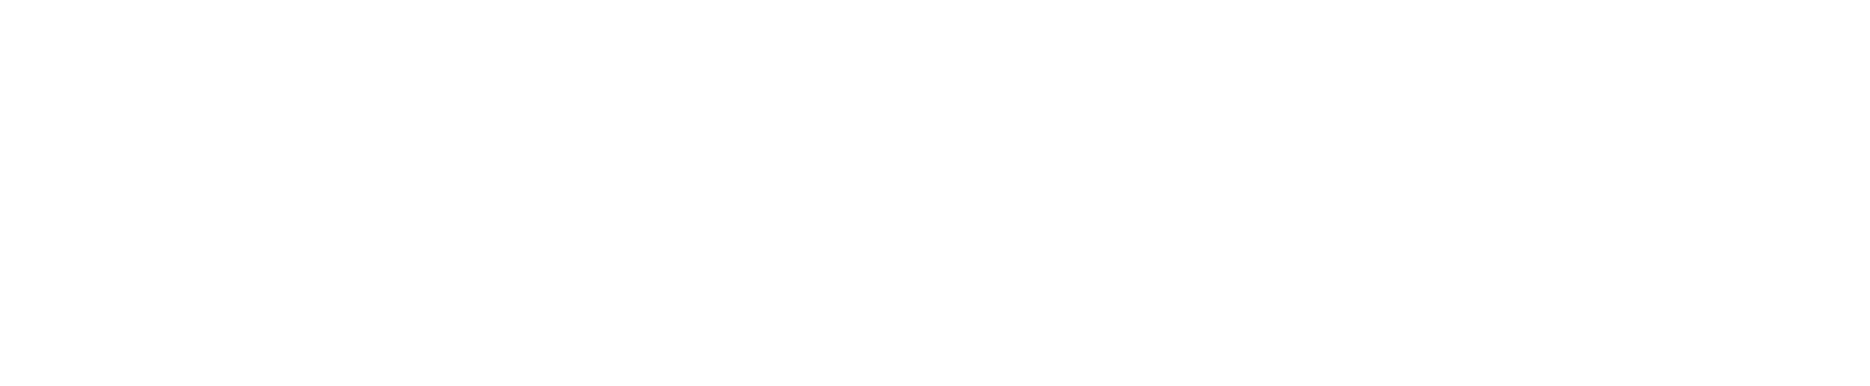 Beef Meal & Potatoes Feeding Chart